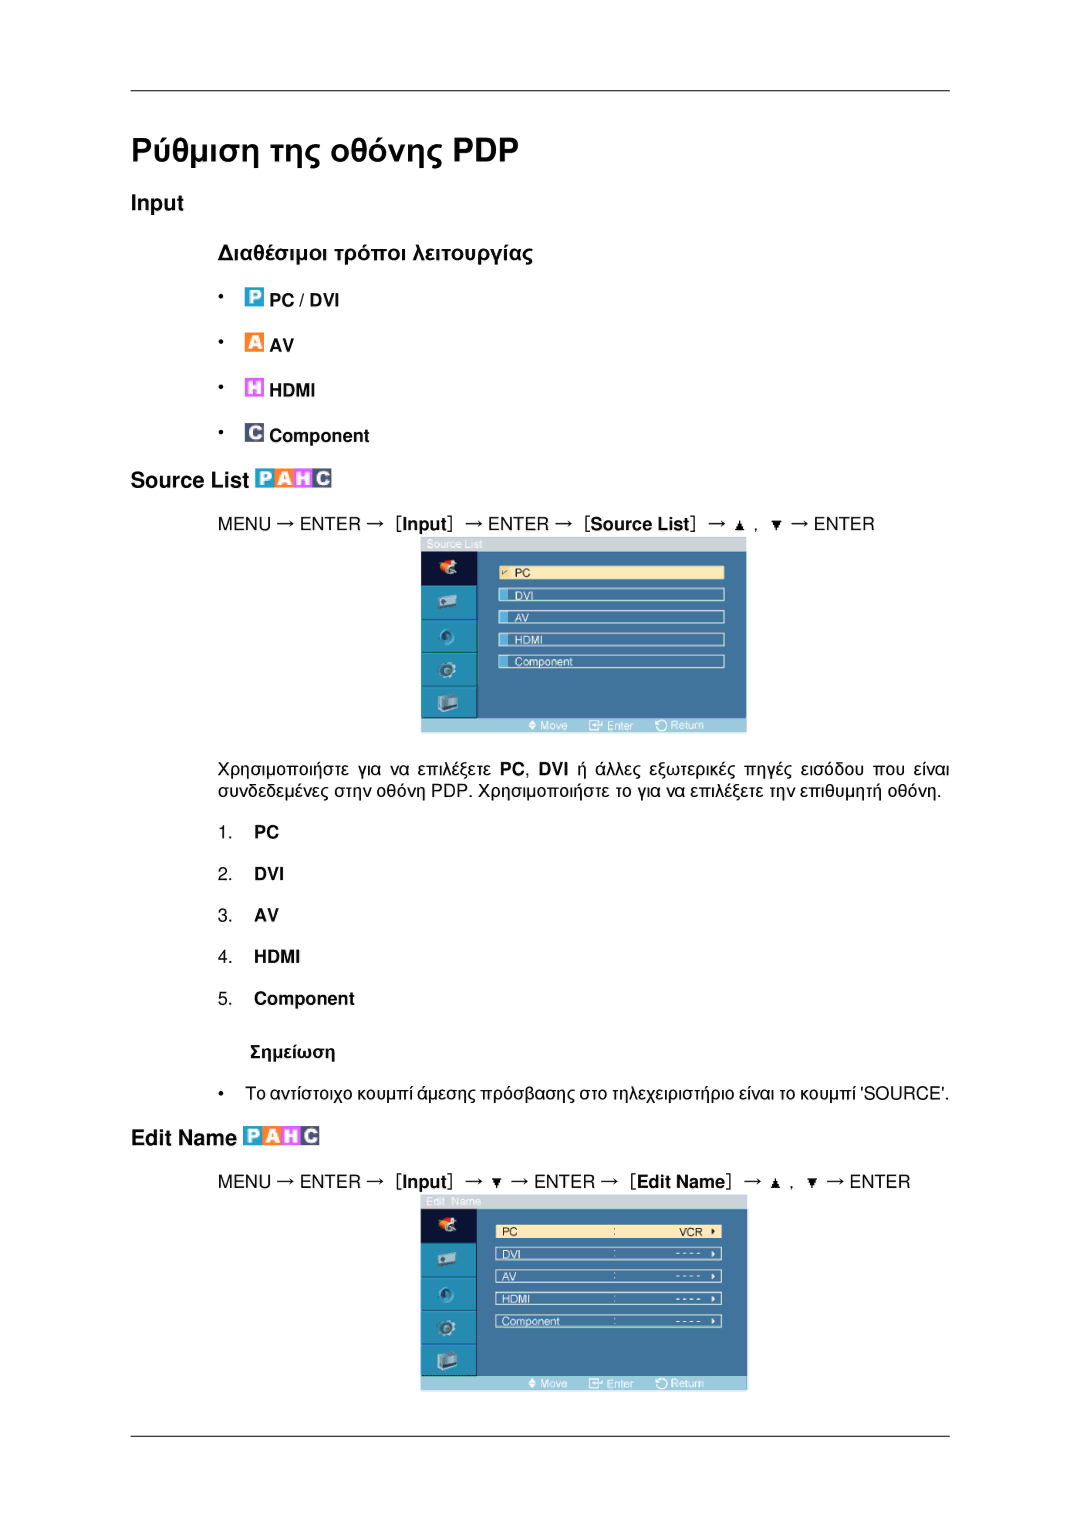 Samsung PH42KPPLBC/EN manual Input Διαθέσιμοι τρόποι λειτουργίας, Source List, Edit Name 